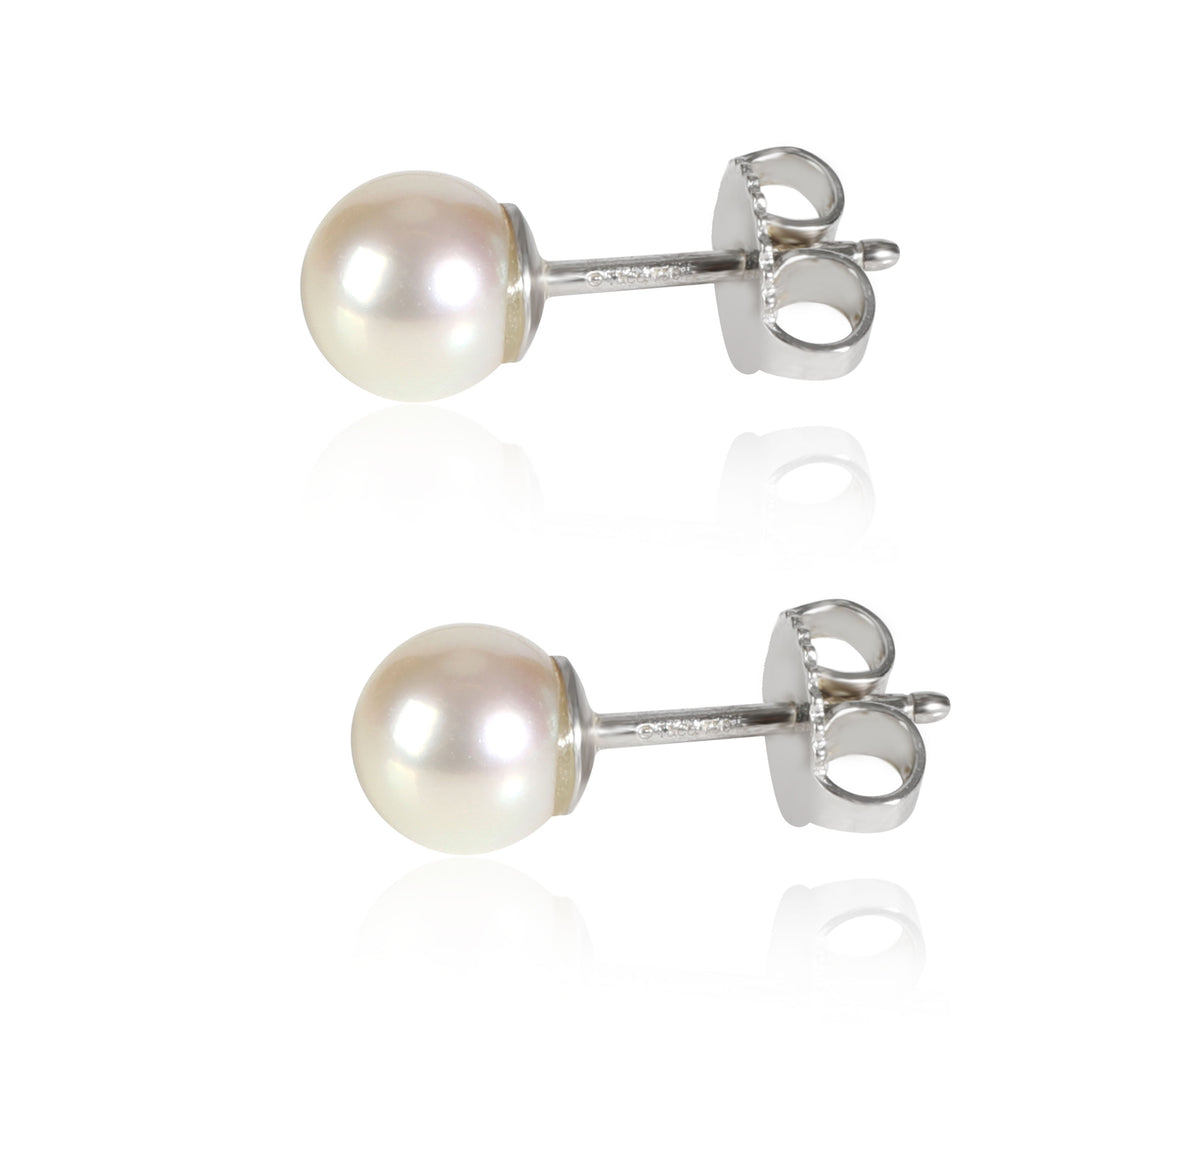 Tiffany & Co. Pearl Stud Earring in 18K White Gold 6mm